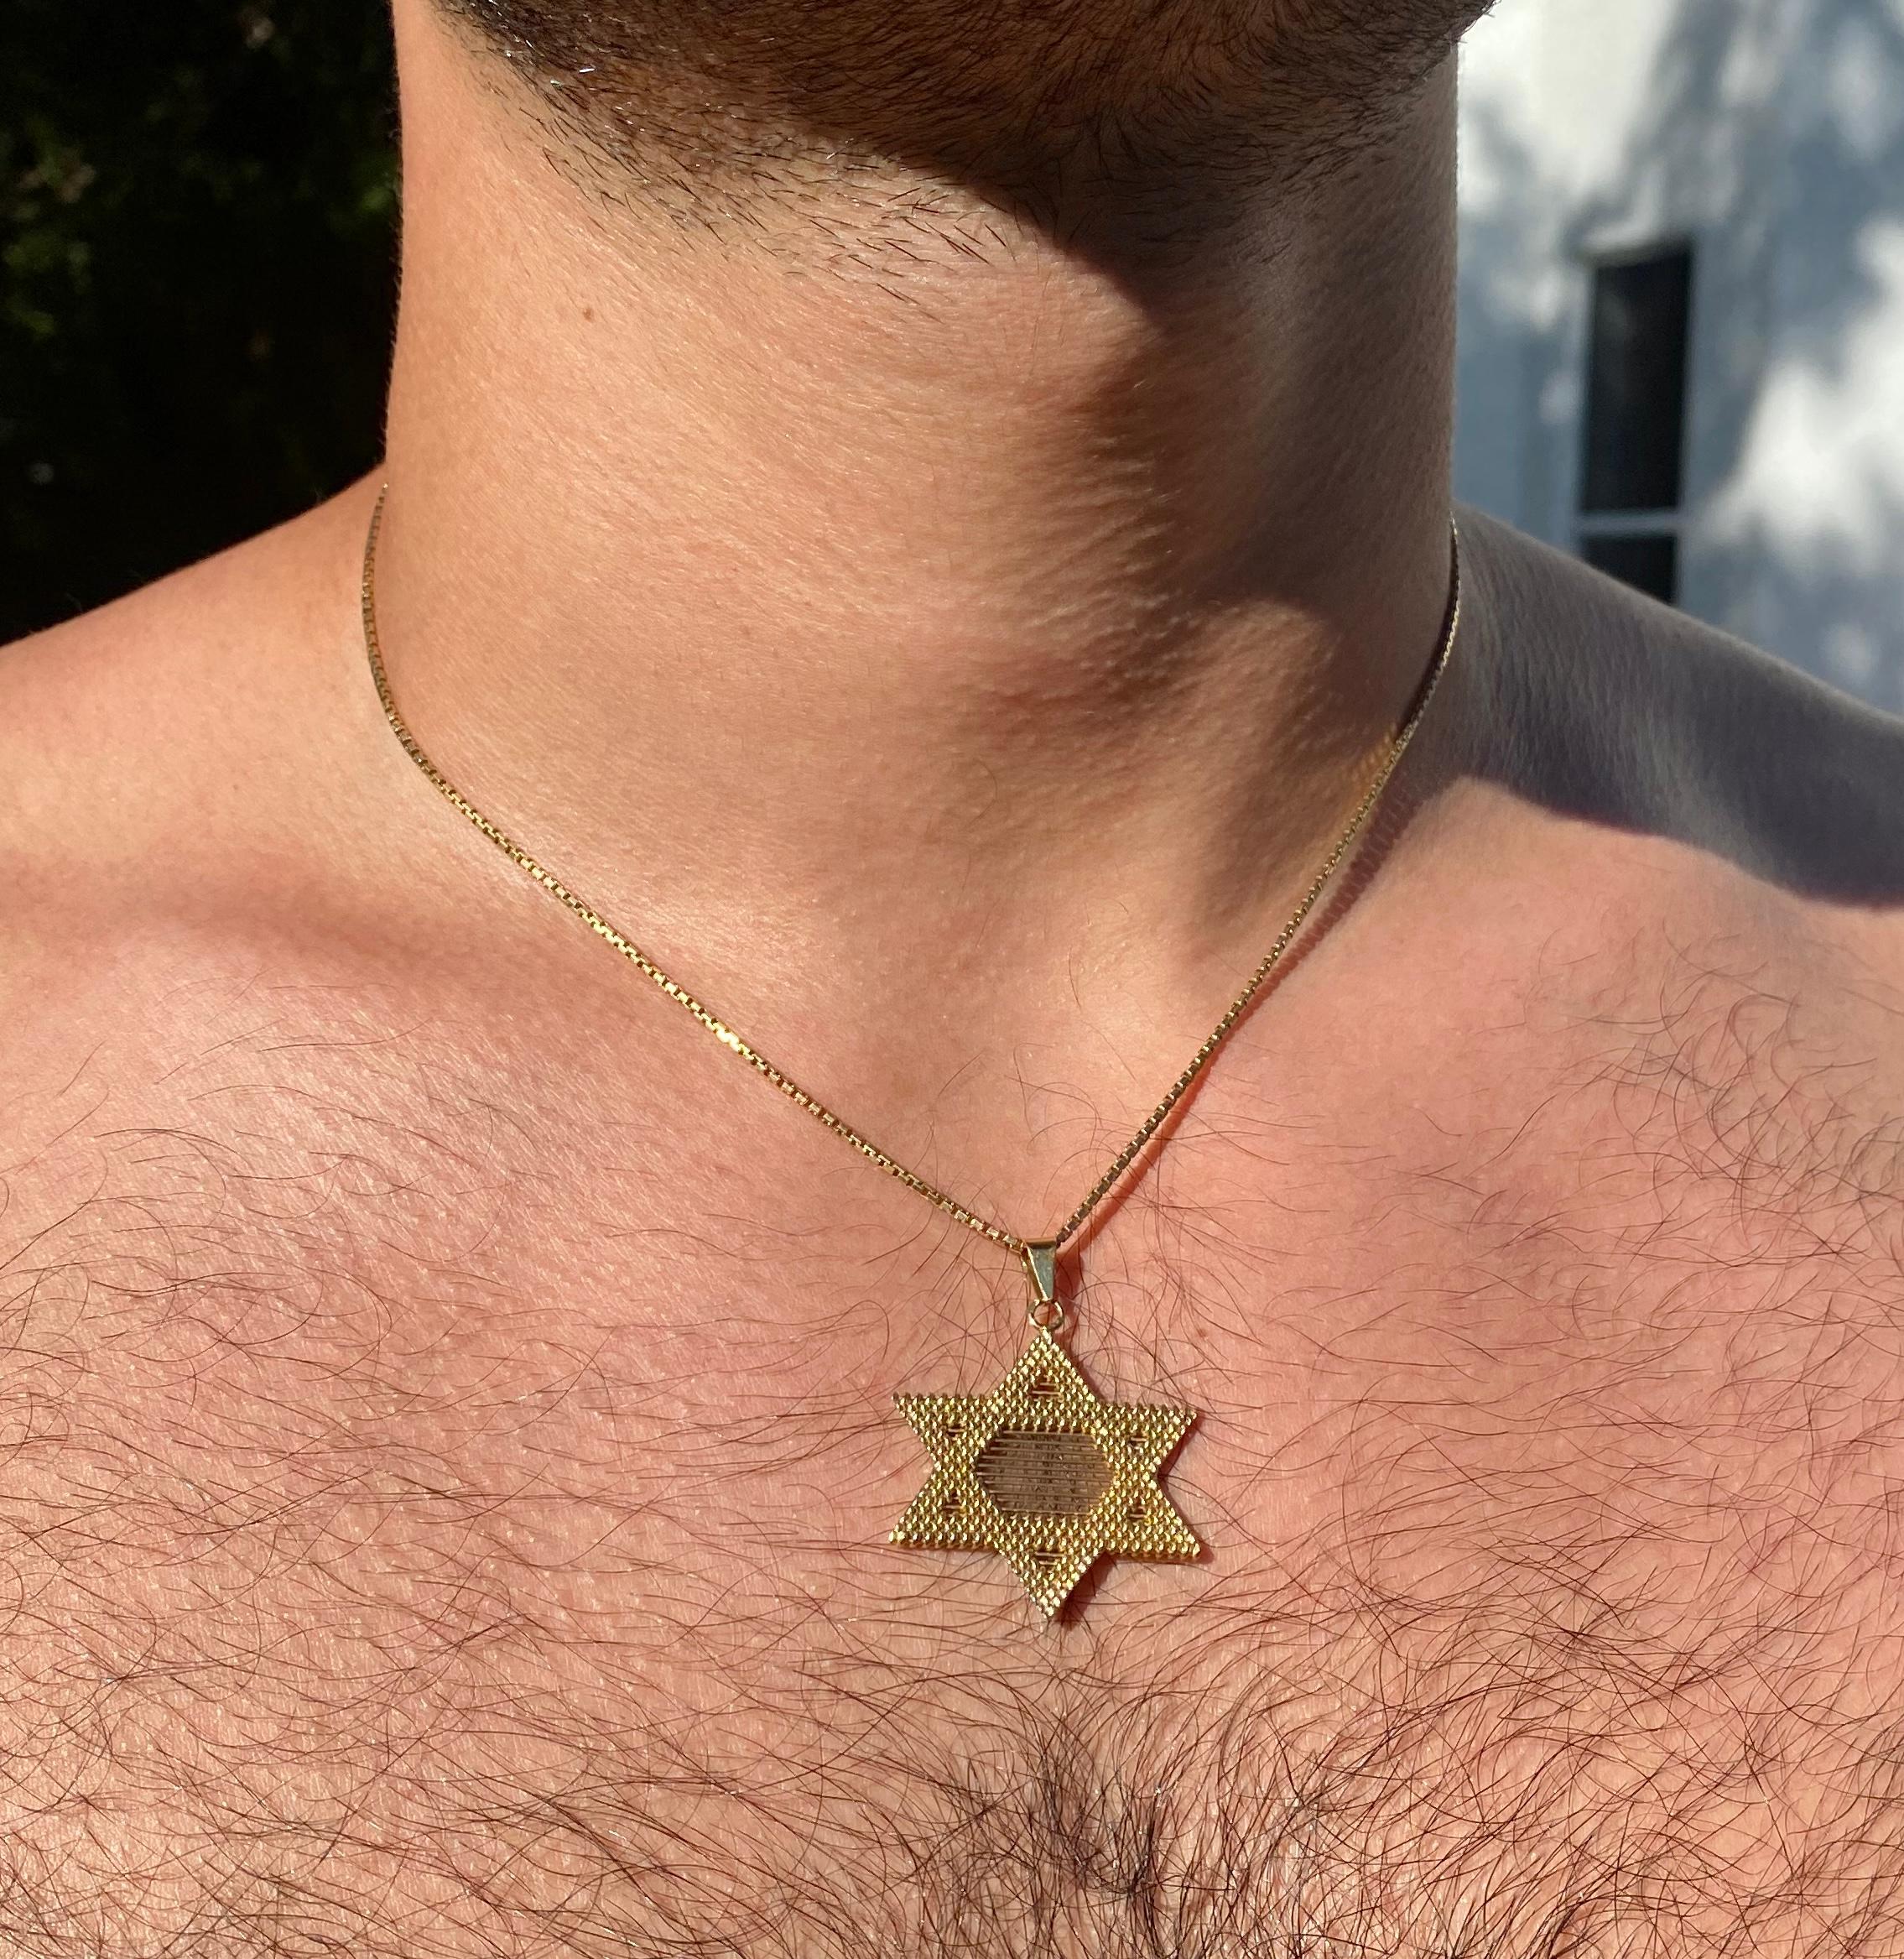 star of david necklace uk